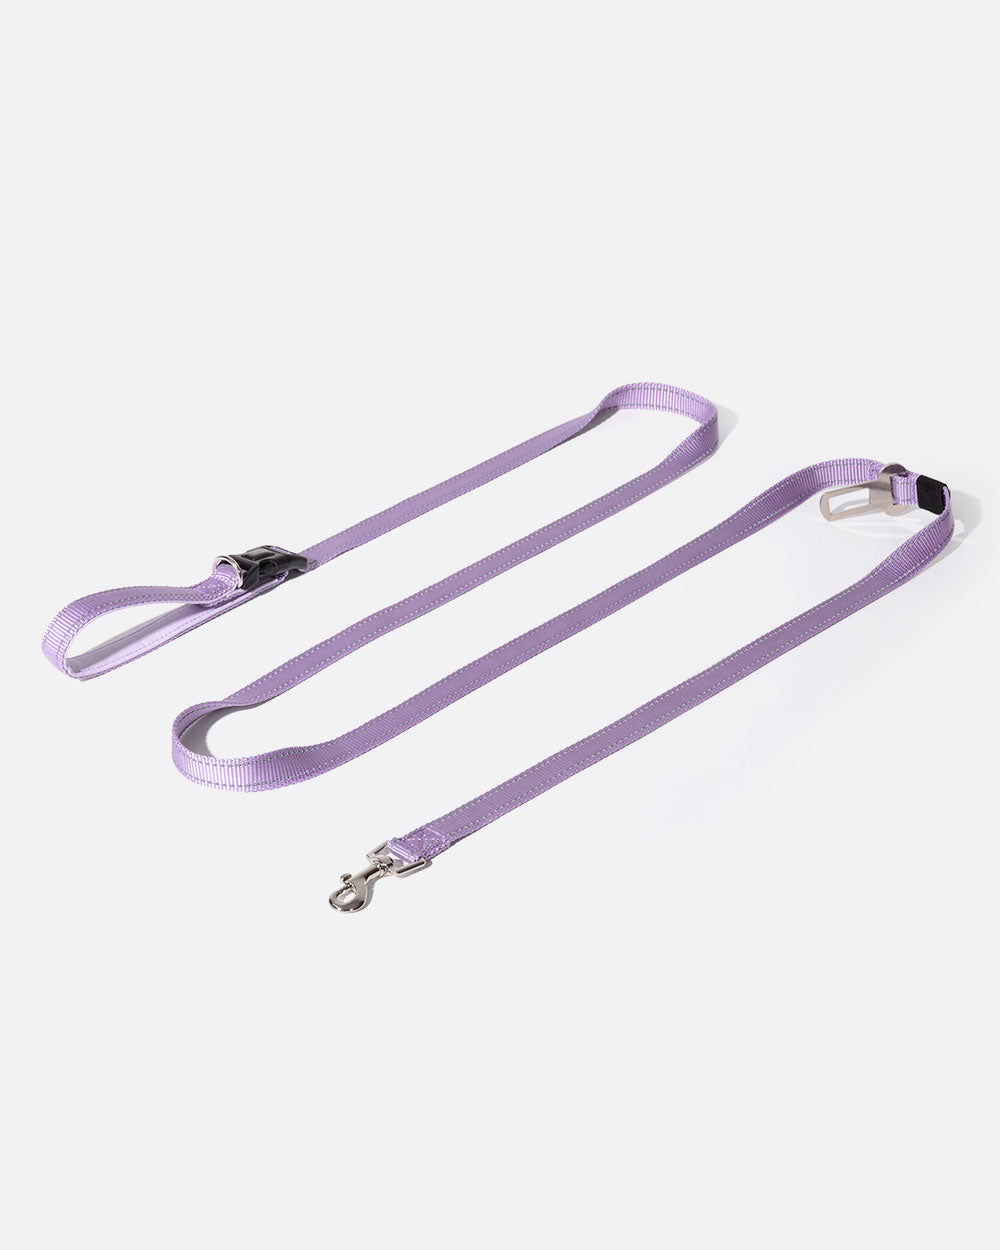 Hands-free Multifunctional Dog Leash - Lavender